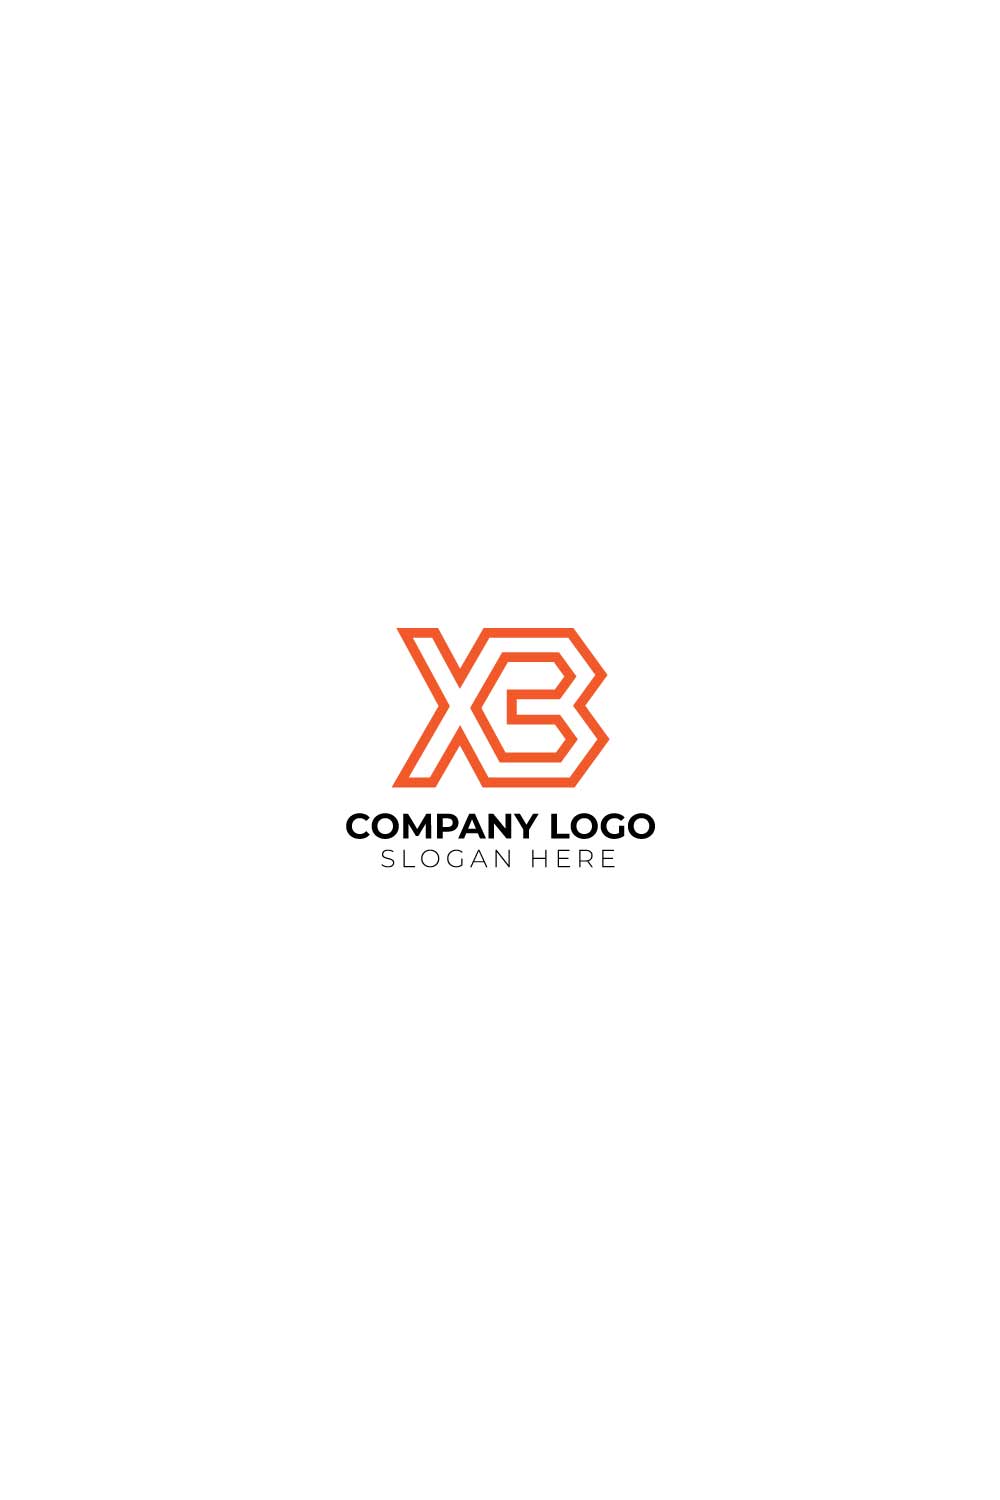 Creative Letters XB Logo Design pinterest preview image.